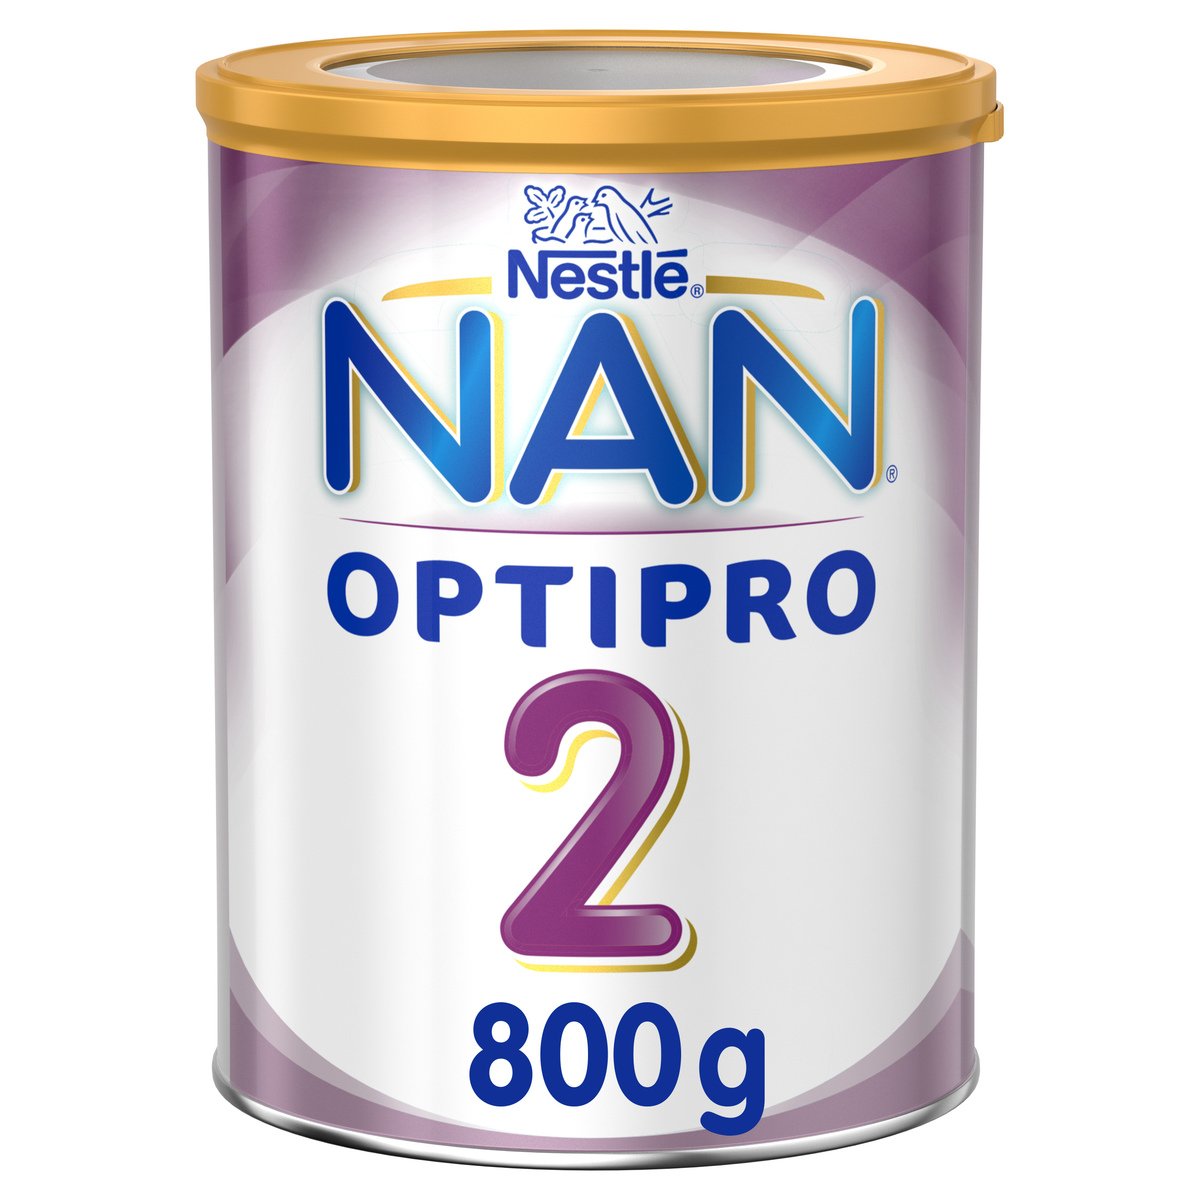 Nestle NAN OPTIPRO Stage 2 Premium Follow-On Formula Powder 6-12 Months 800 g